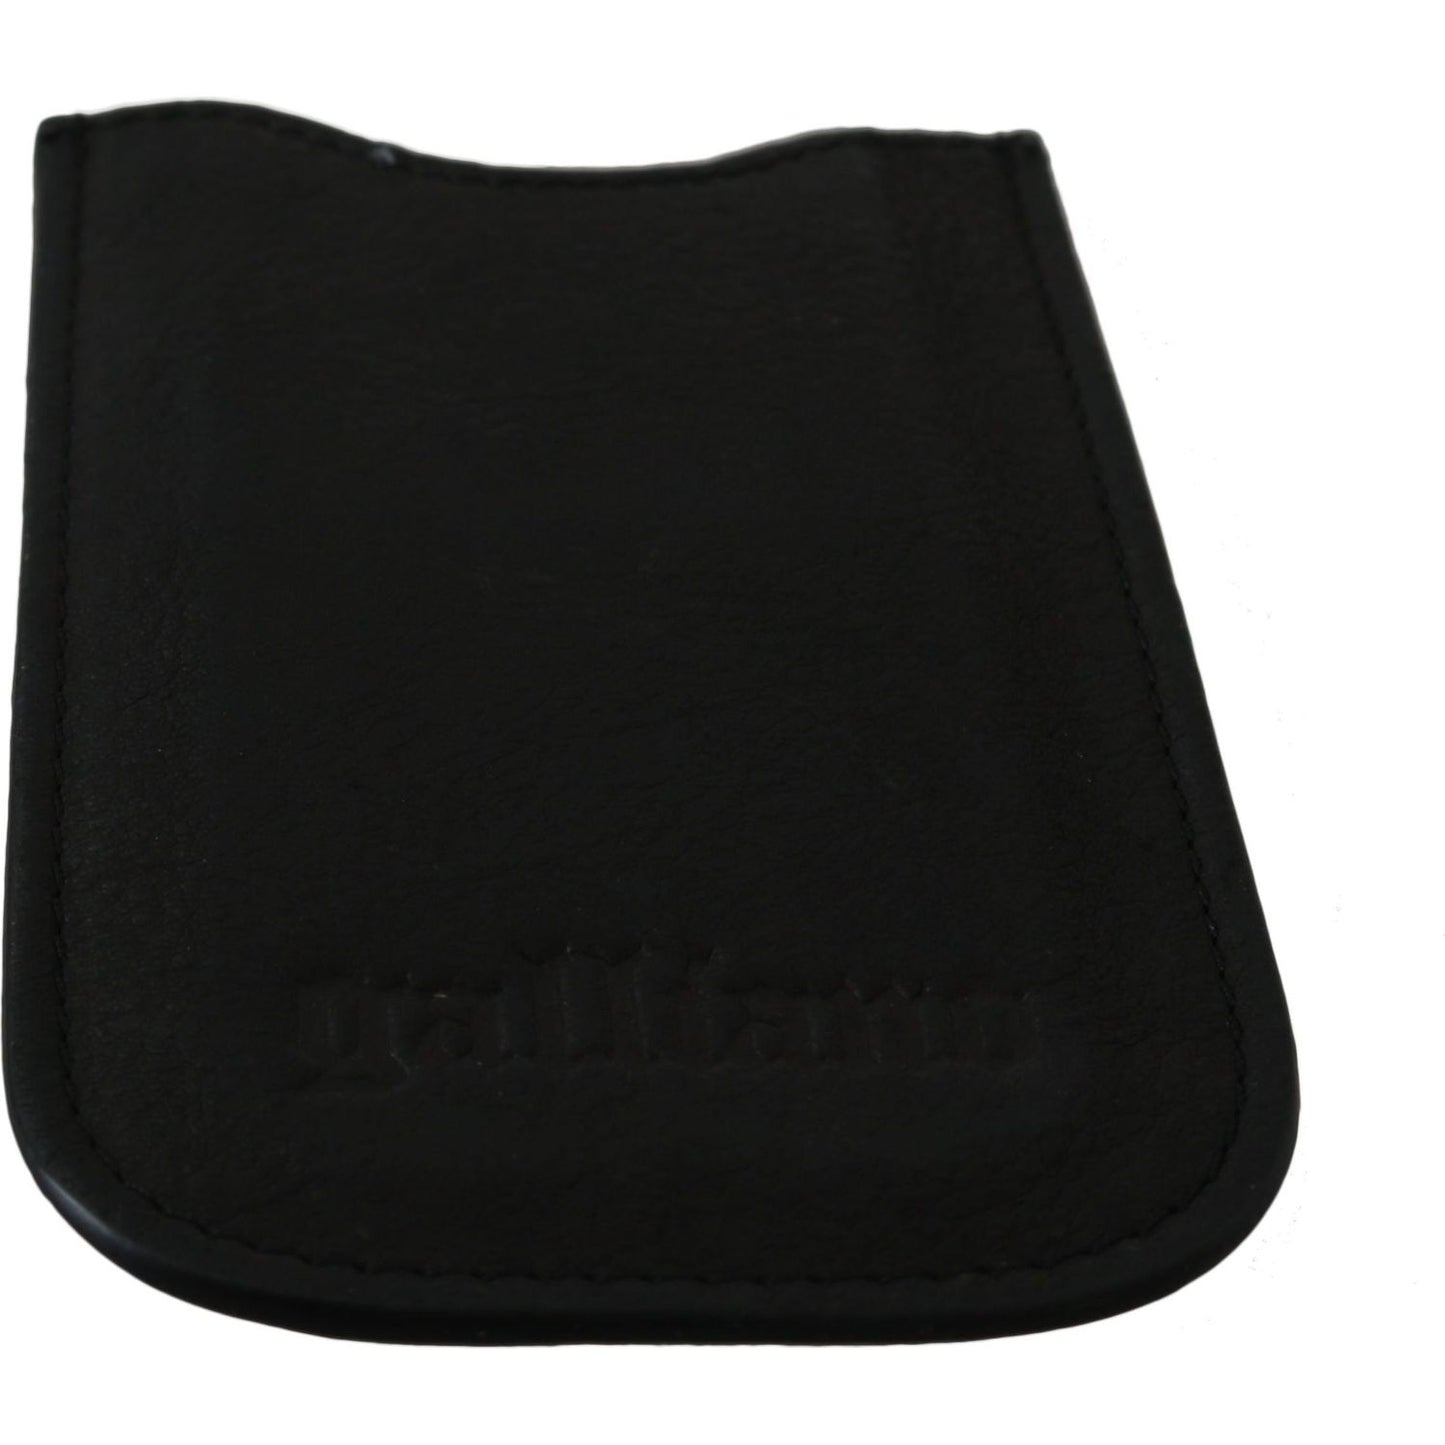 John Galliano Elegant Black Genuine Leather Men's Wallet Wallet black-leather-multifunctional-men-id-bill-card-holder-wallet